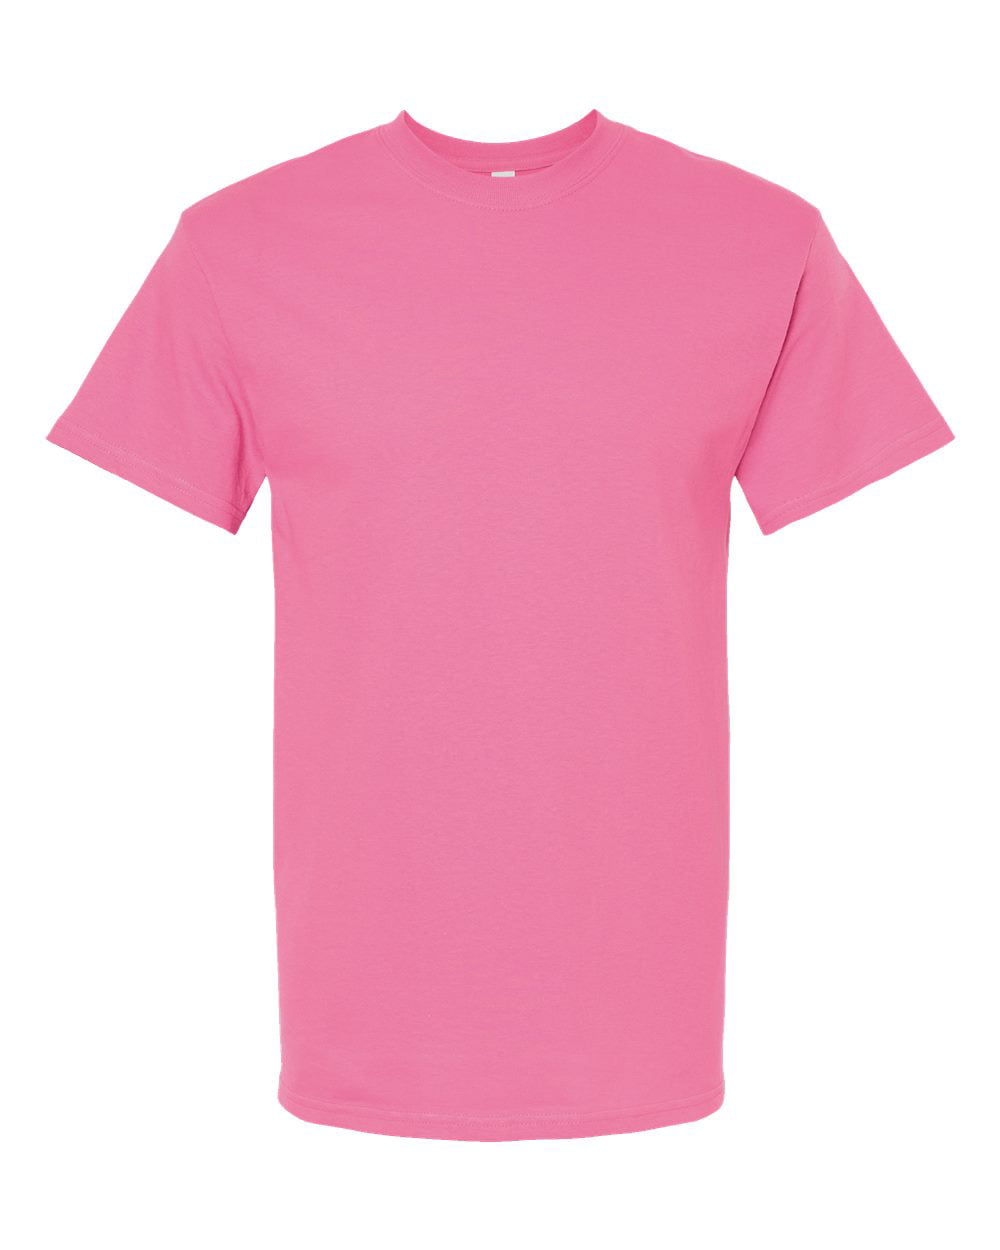 M&O Gold Soft Touch T-Shirt Size up to 5XL - Walmart.com